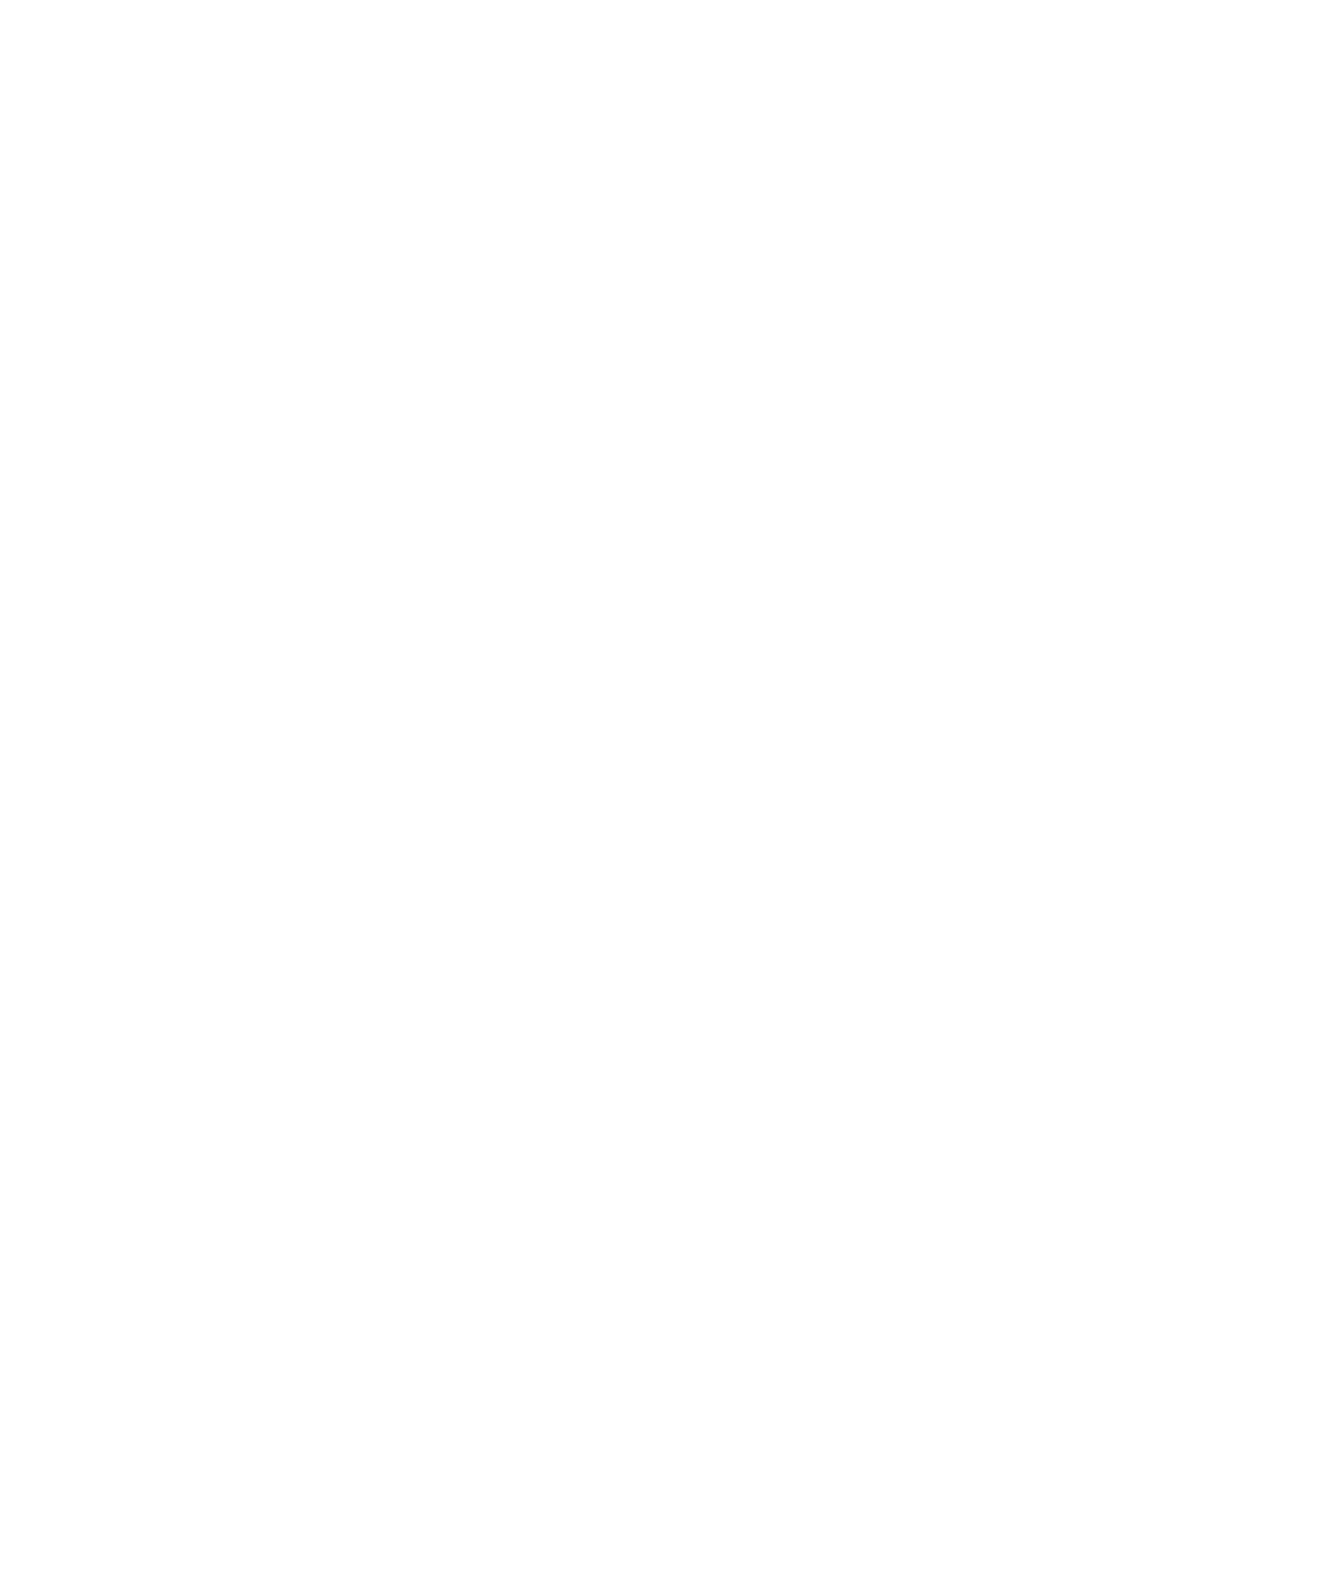 Rolls-Royce Holdings logo pour fonds sombres (PNG transparent)